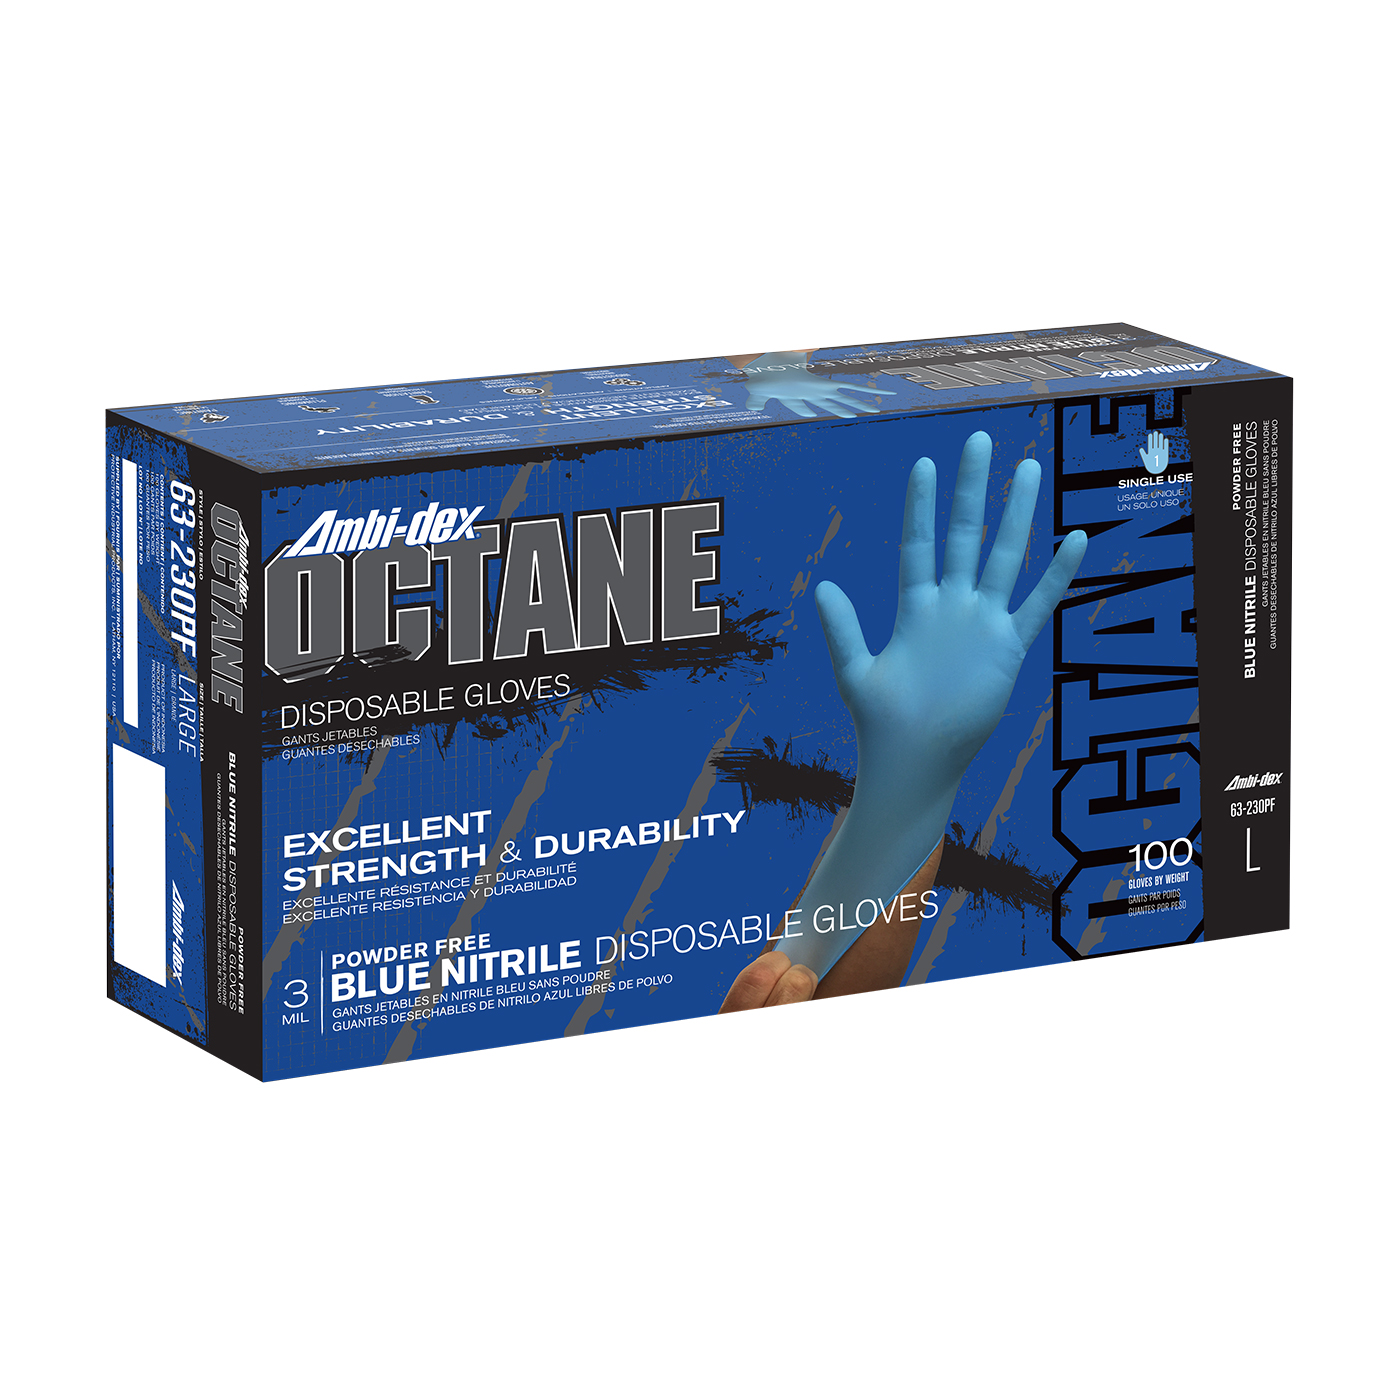 #63-230PF Ambi-dex® Octane Disposable Nitrile Glove, Powder Free with Textured Grip - 3 mil